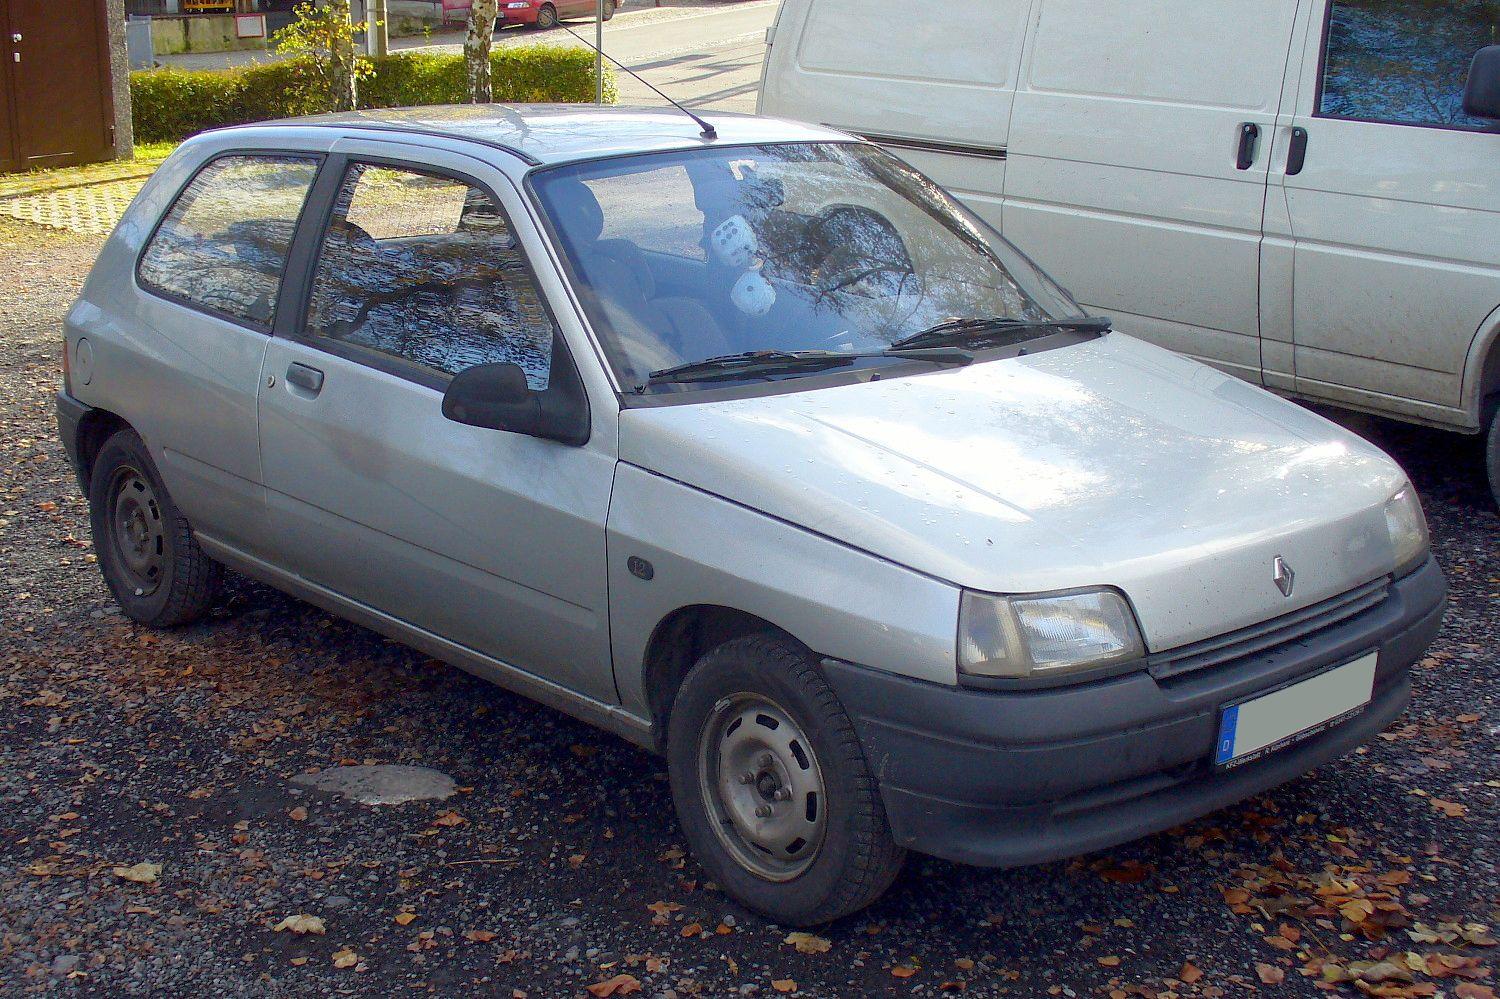 meesterwerk Editie Vervolgen File:Renault Clio I Phase I Dreitürer 1.2 RN.JPG - Wikimedia Commons